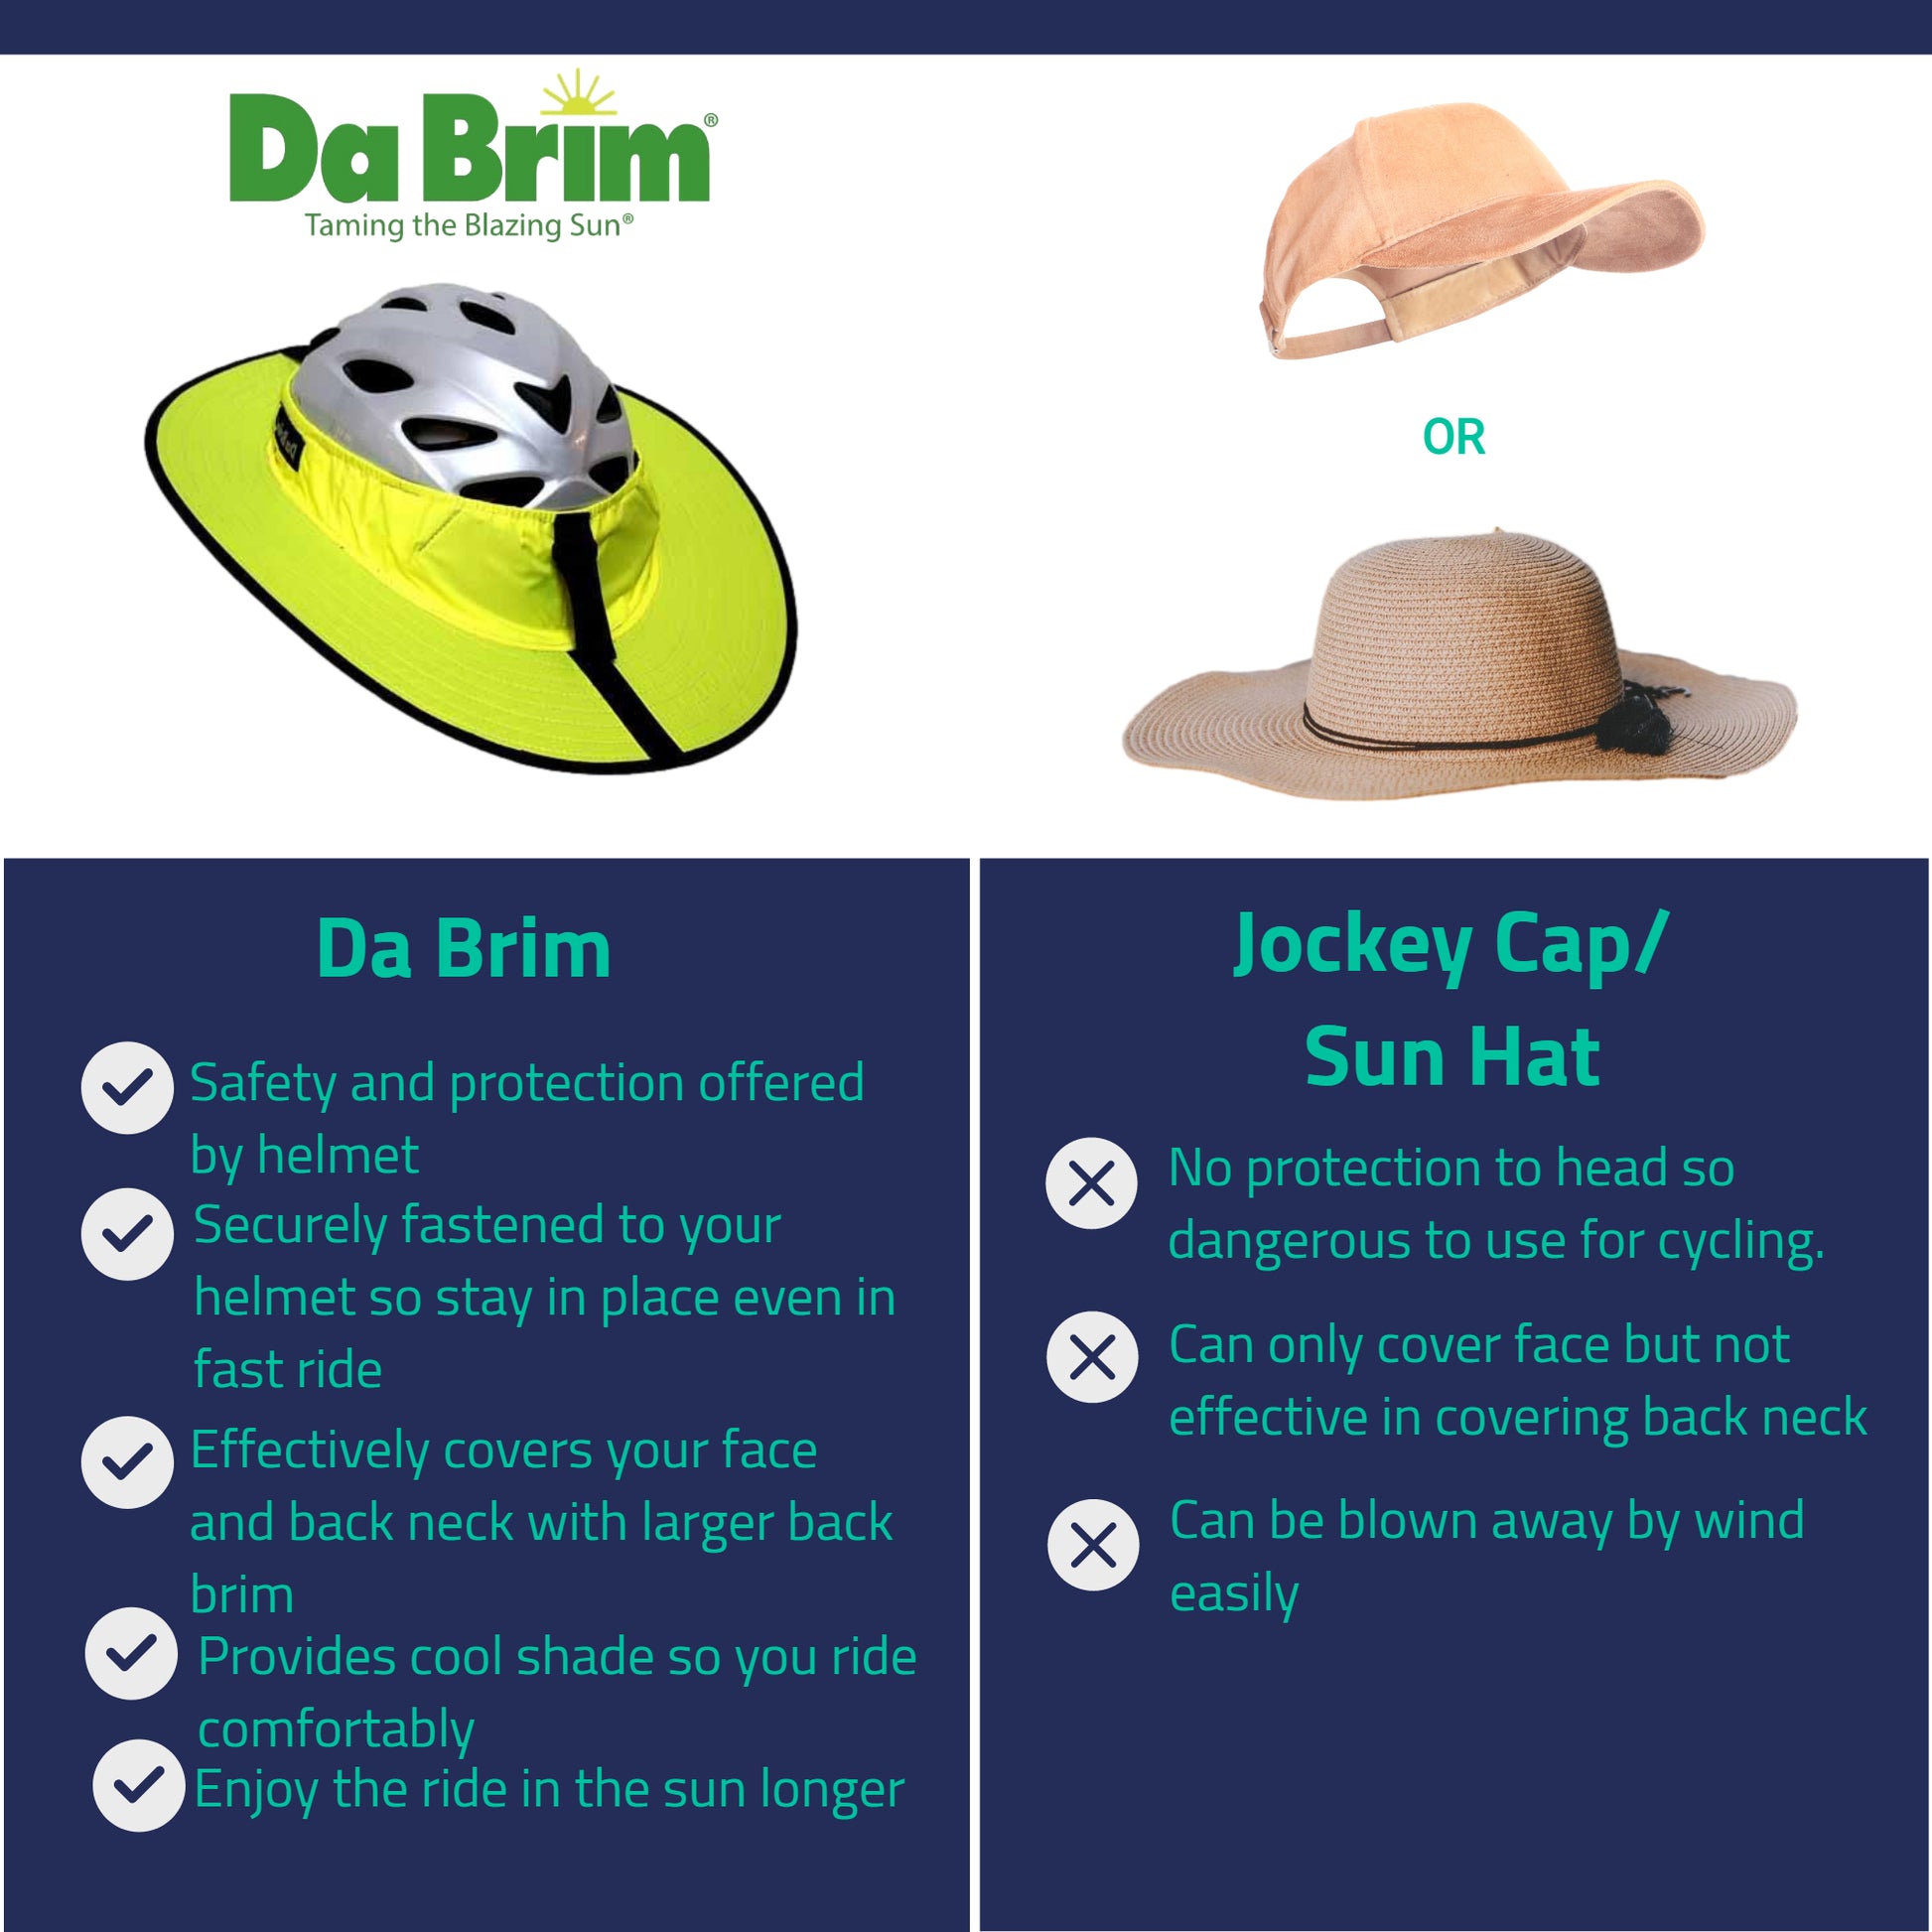 Da Brim Cycling Classic and Jockey Cap or Sun Hat Comparison.